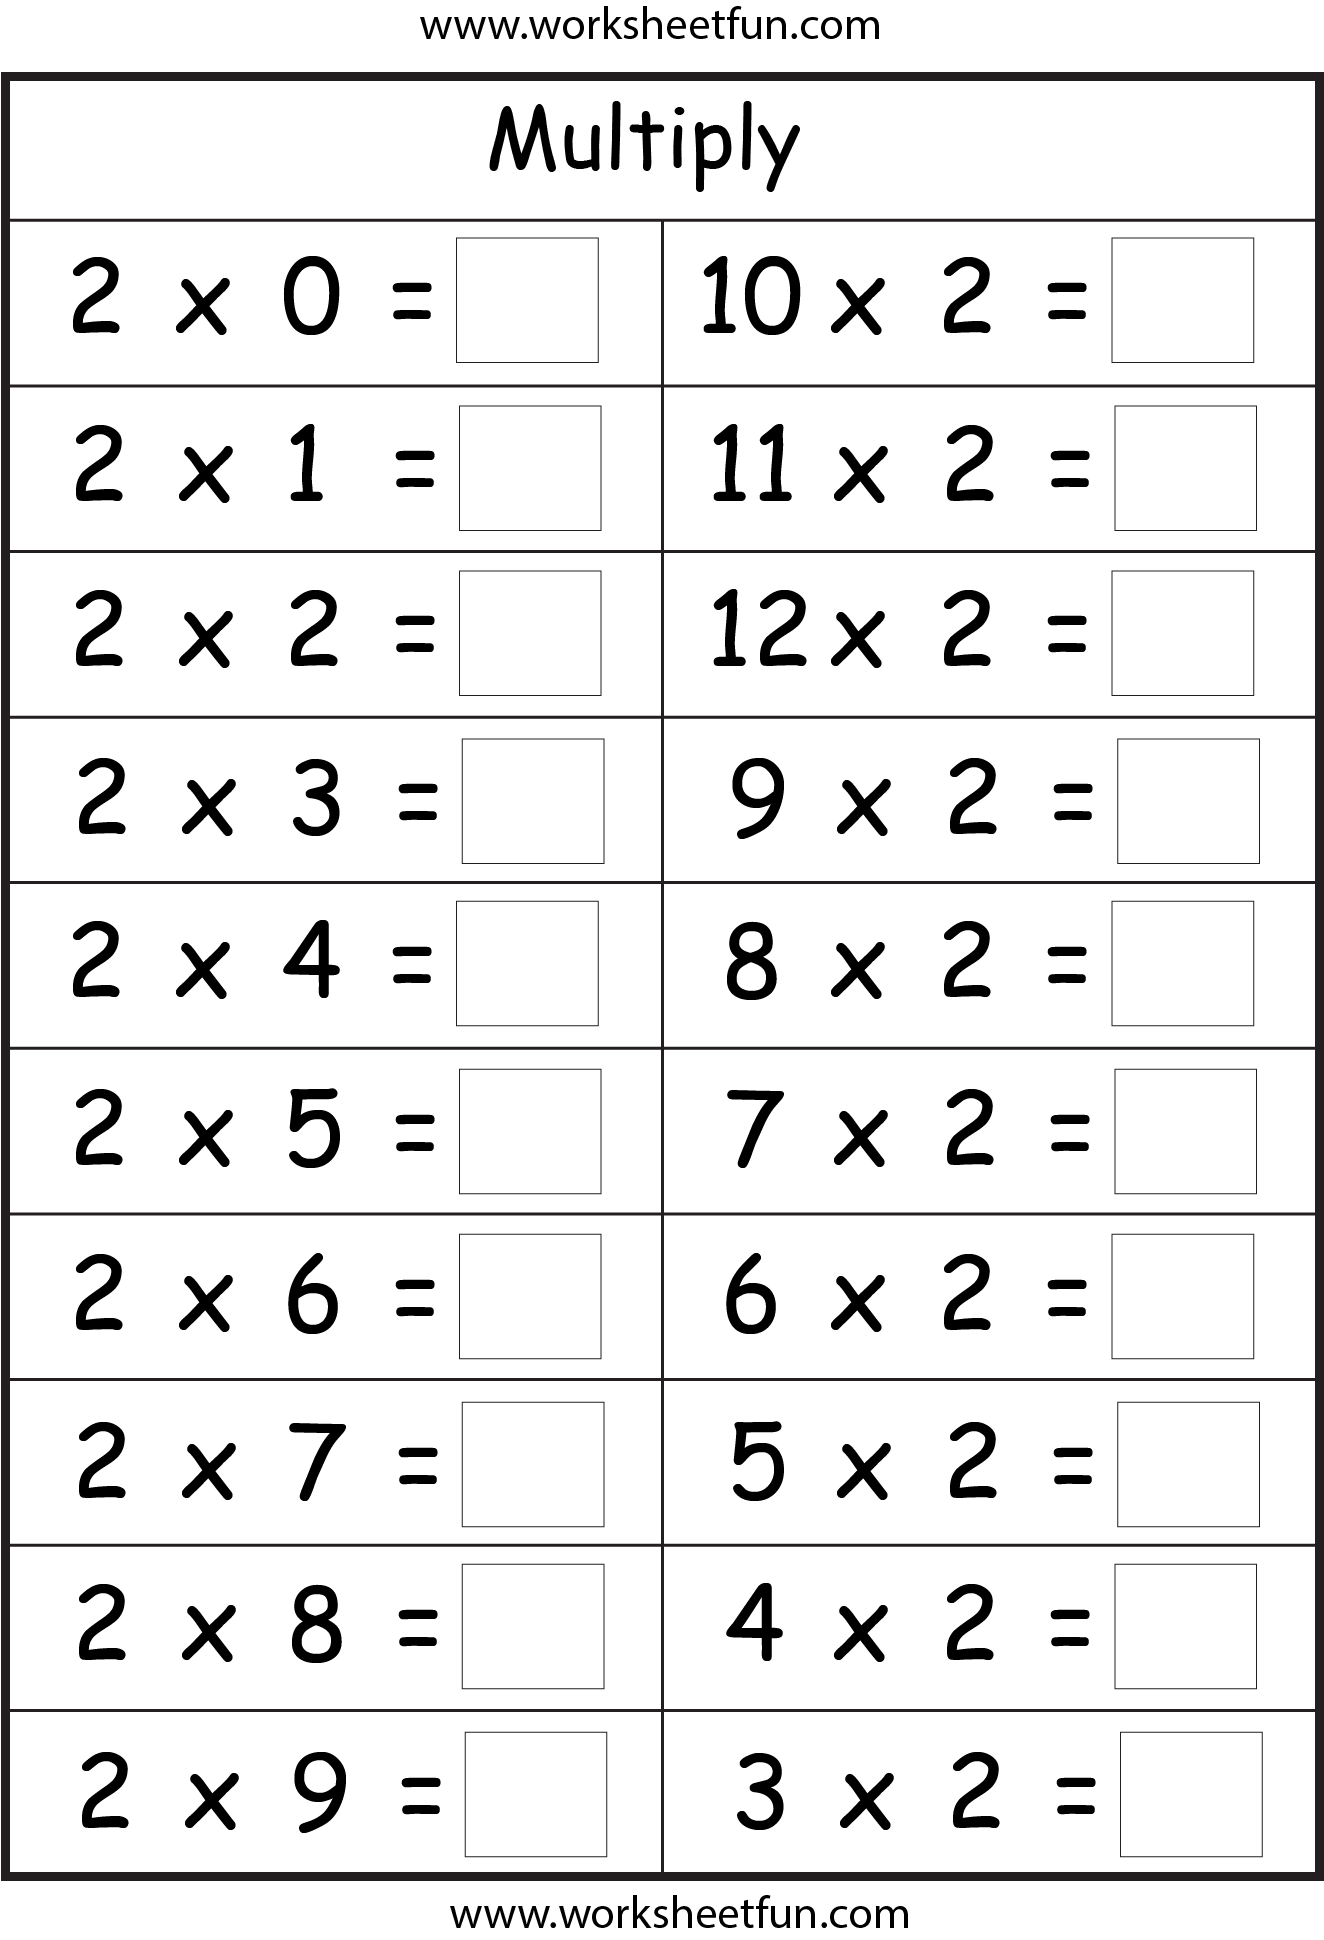 Multiplication Concepts Worksheets For Grade 2